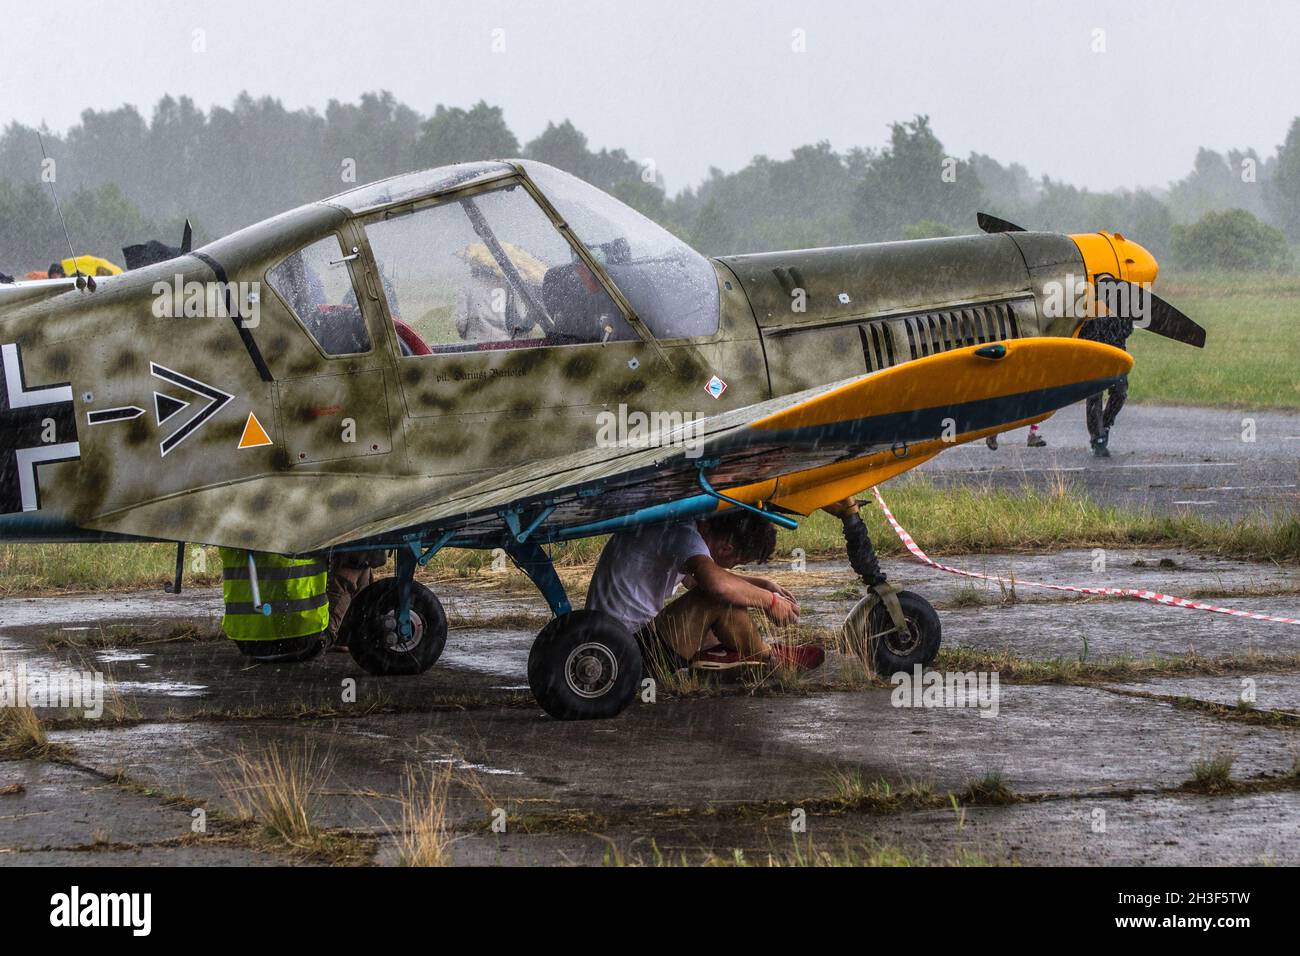 Biala Podlaska, Poland - June 22, 2014: Polish Aviation Legends (Fundacja Legendy Lotnictwa) open day - Zlin 42 (SP-AKF) in heavy rain Stock Photo